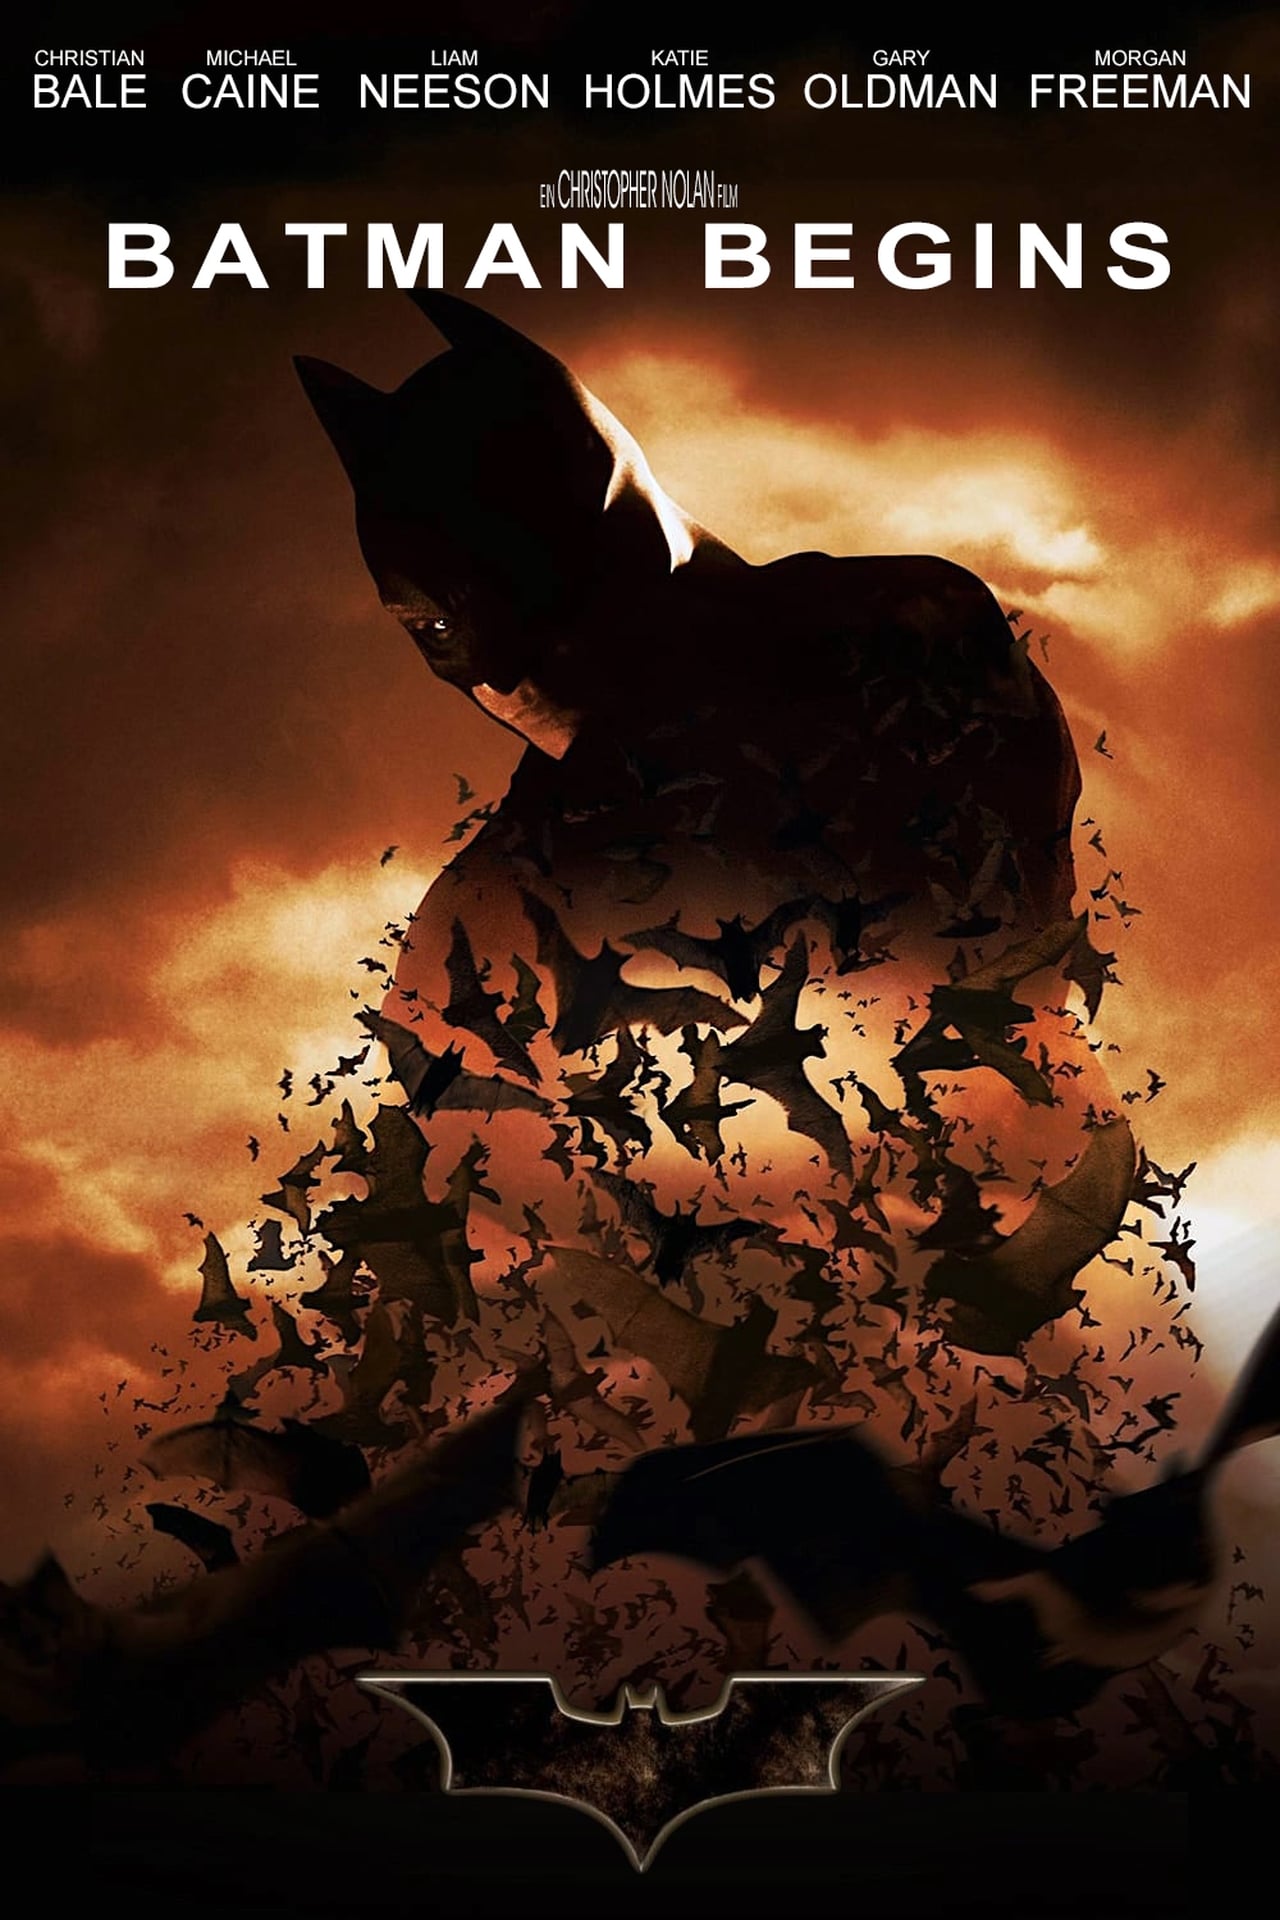 Watch Full Batman Begins (2005) Movies Trailer at hd.megafoxmovies.com